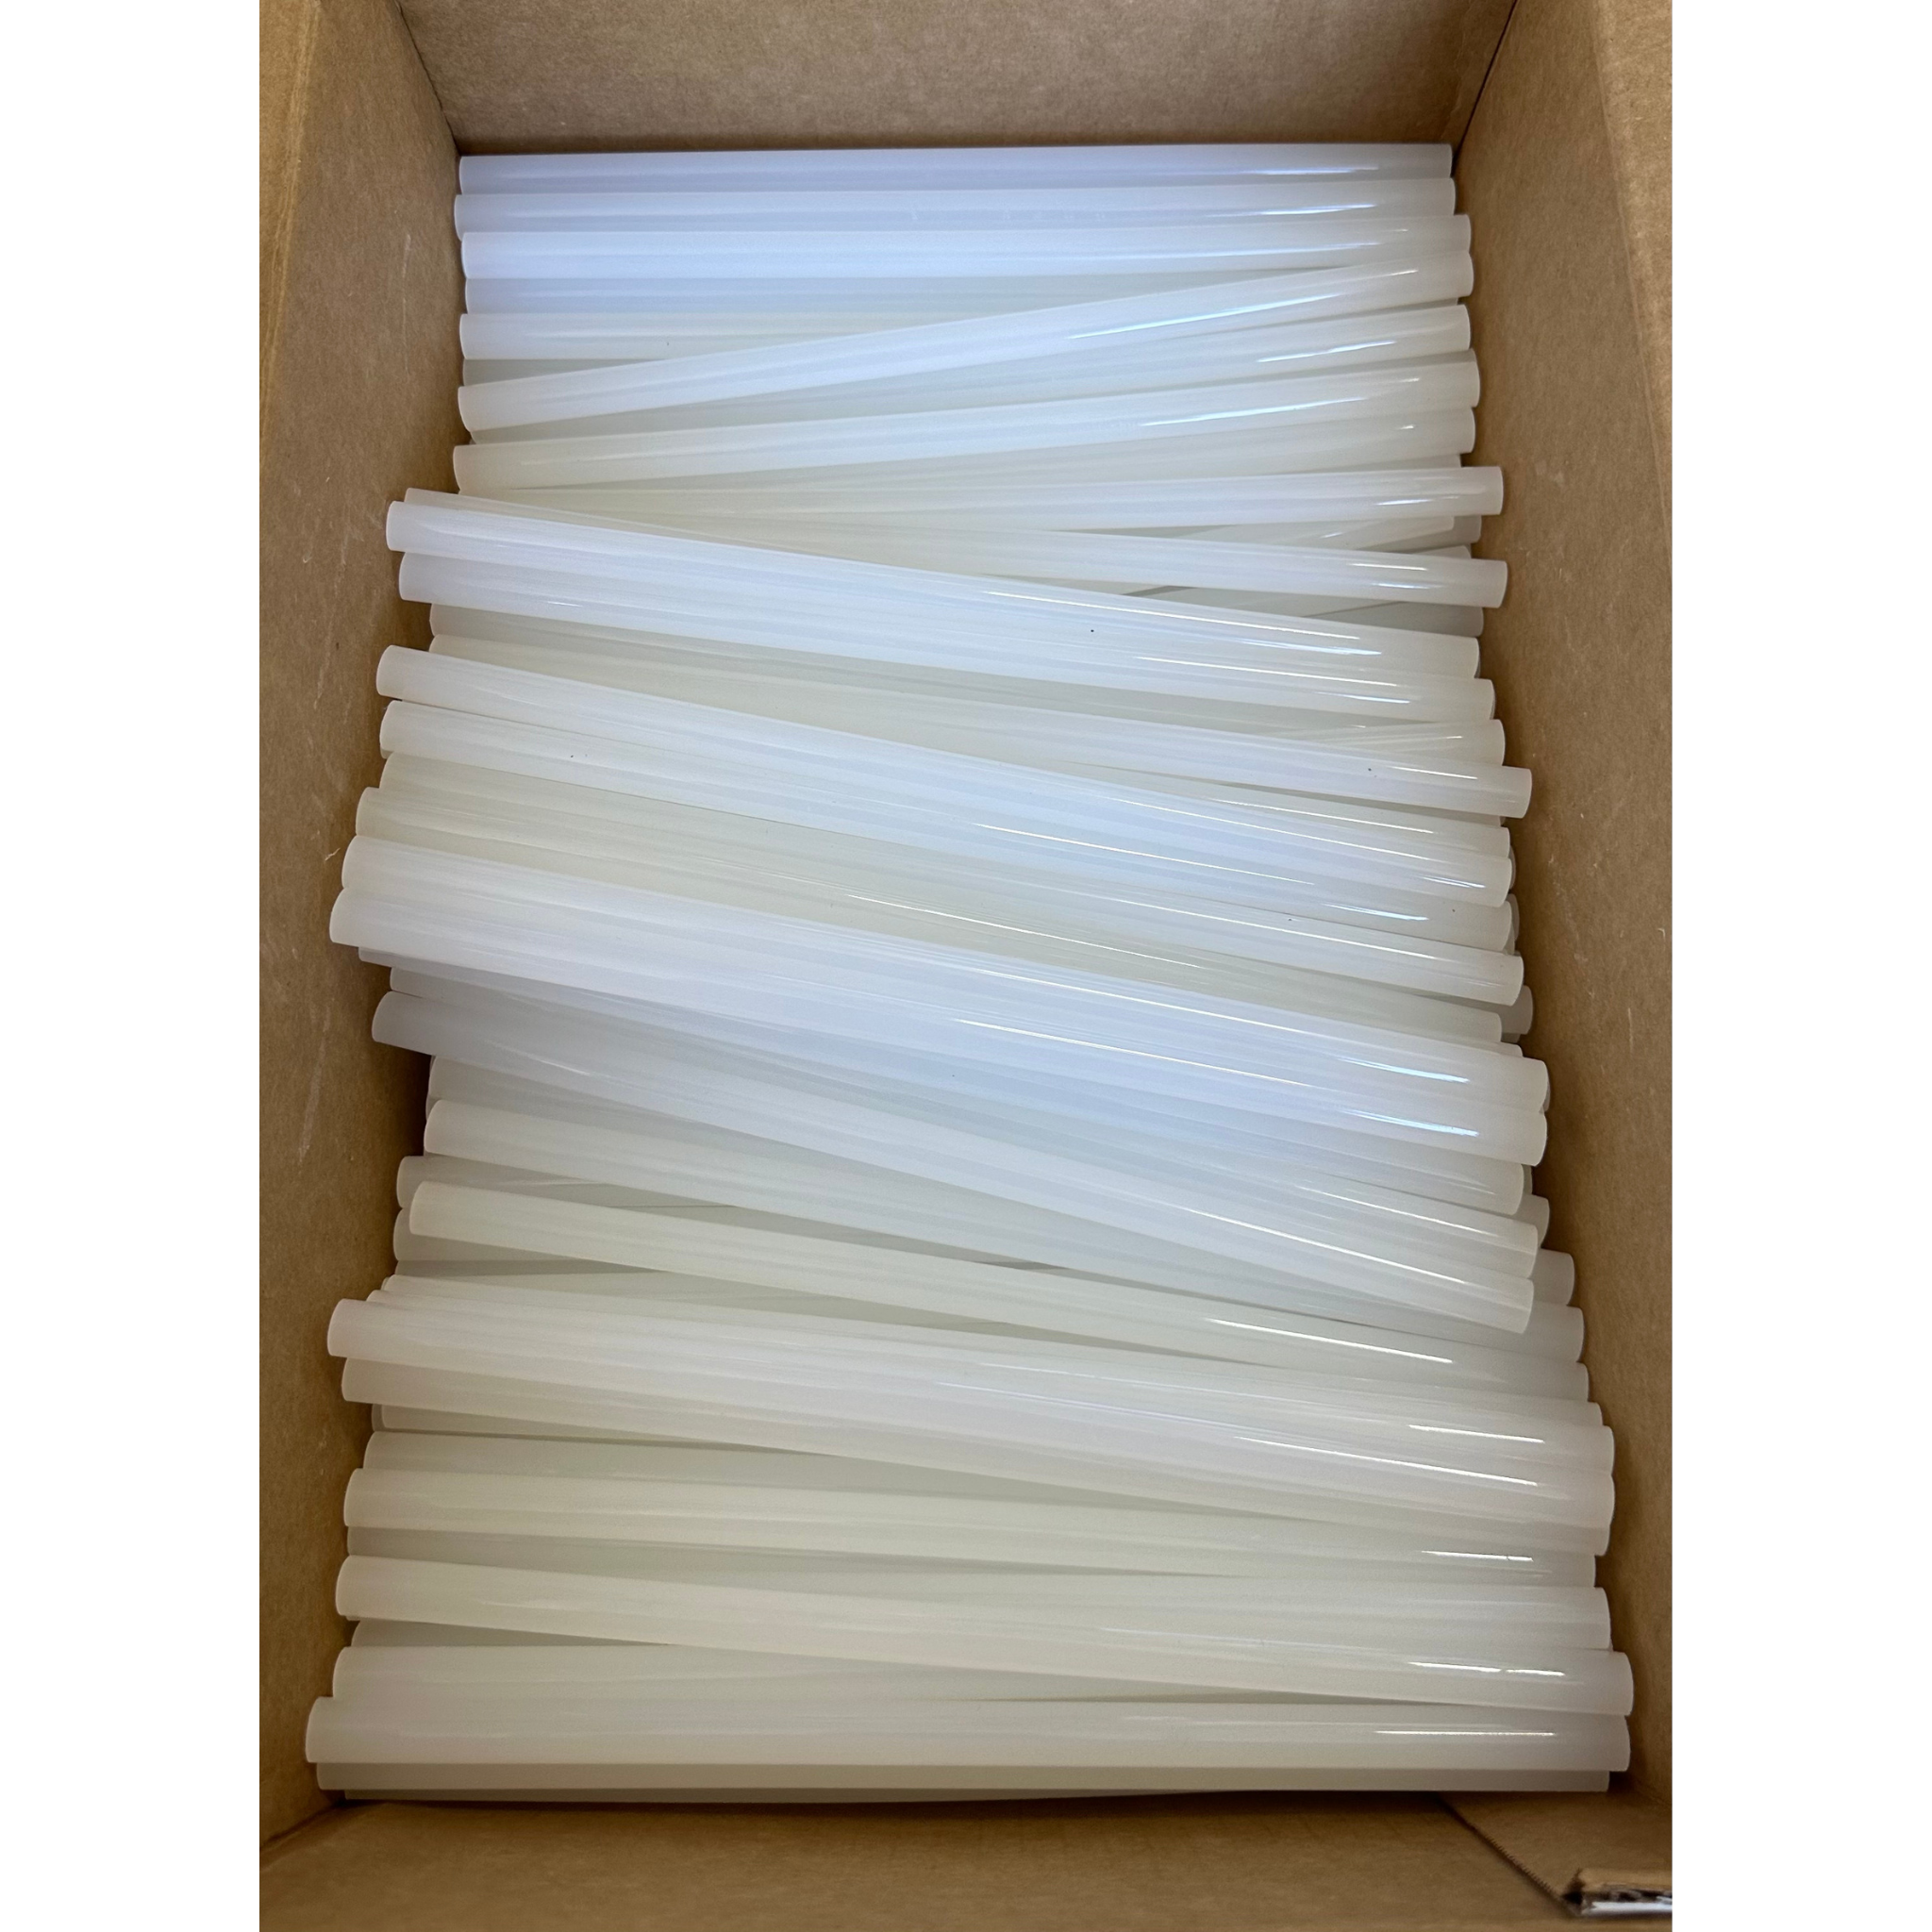 25 lb box of 10 inch glue sticks